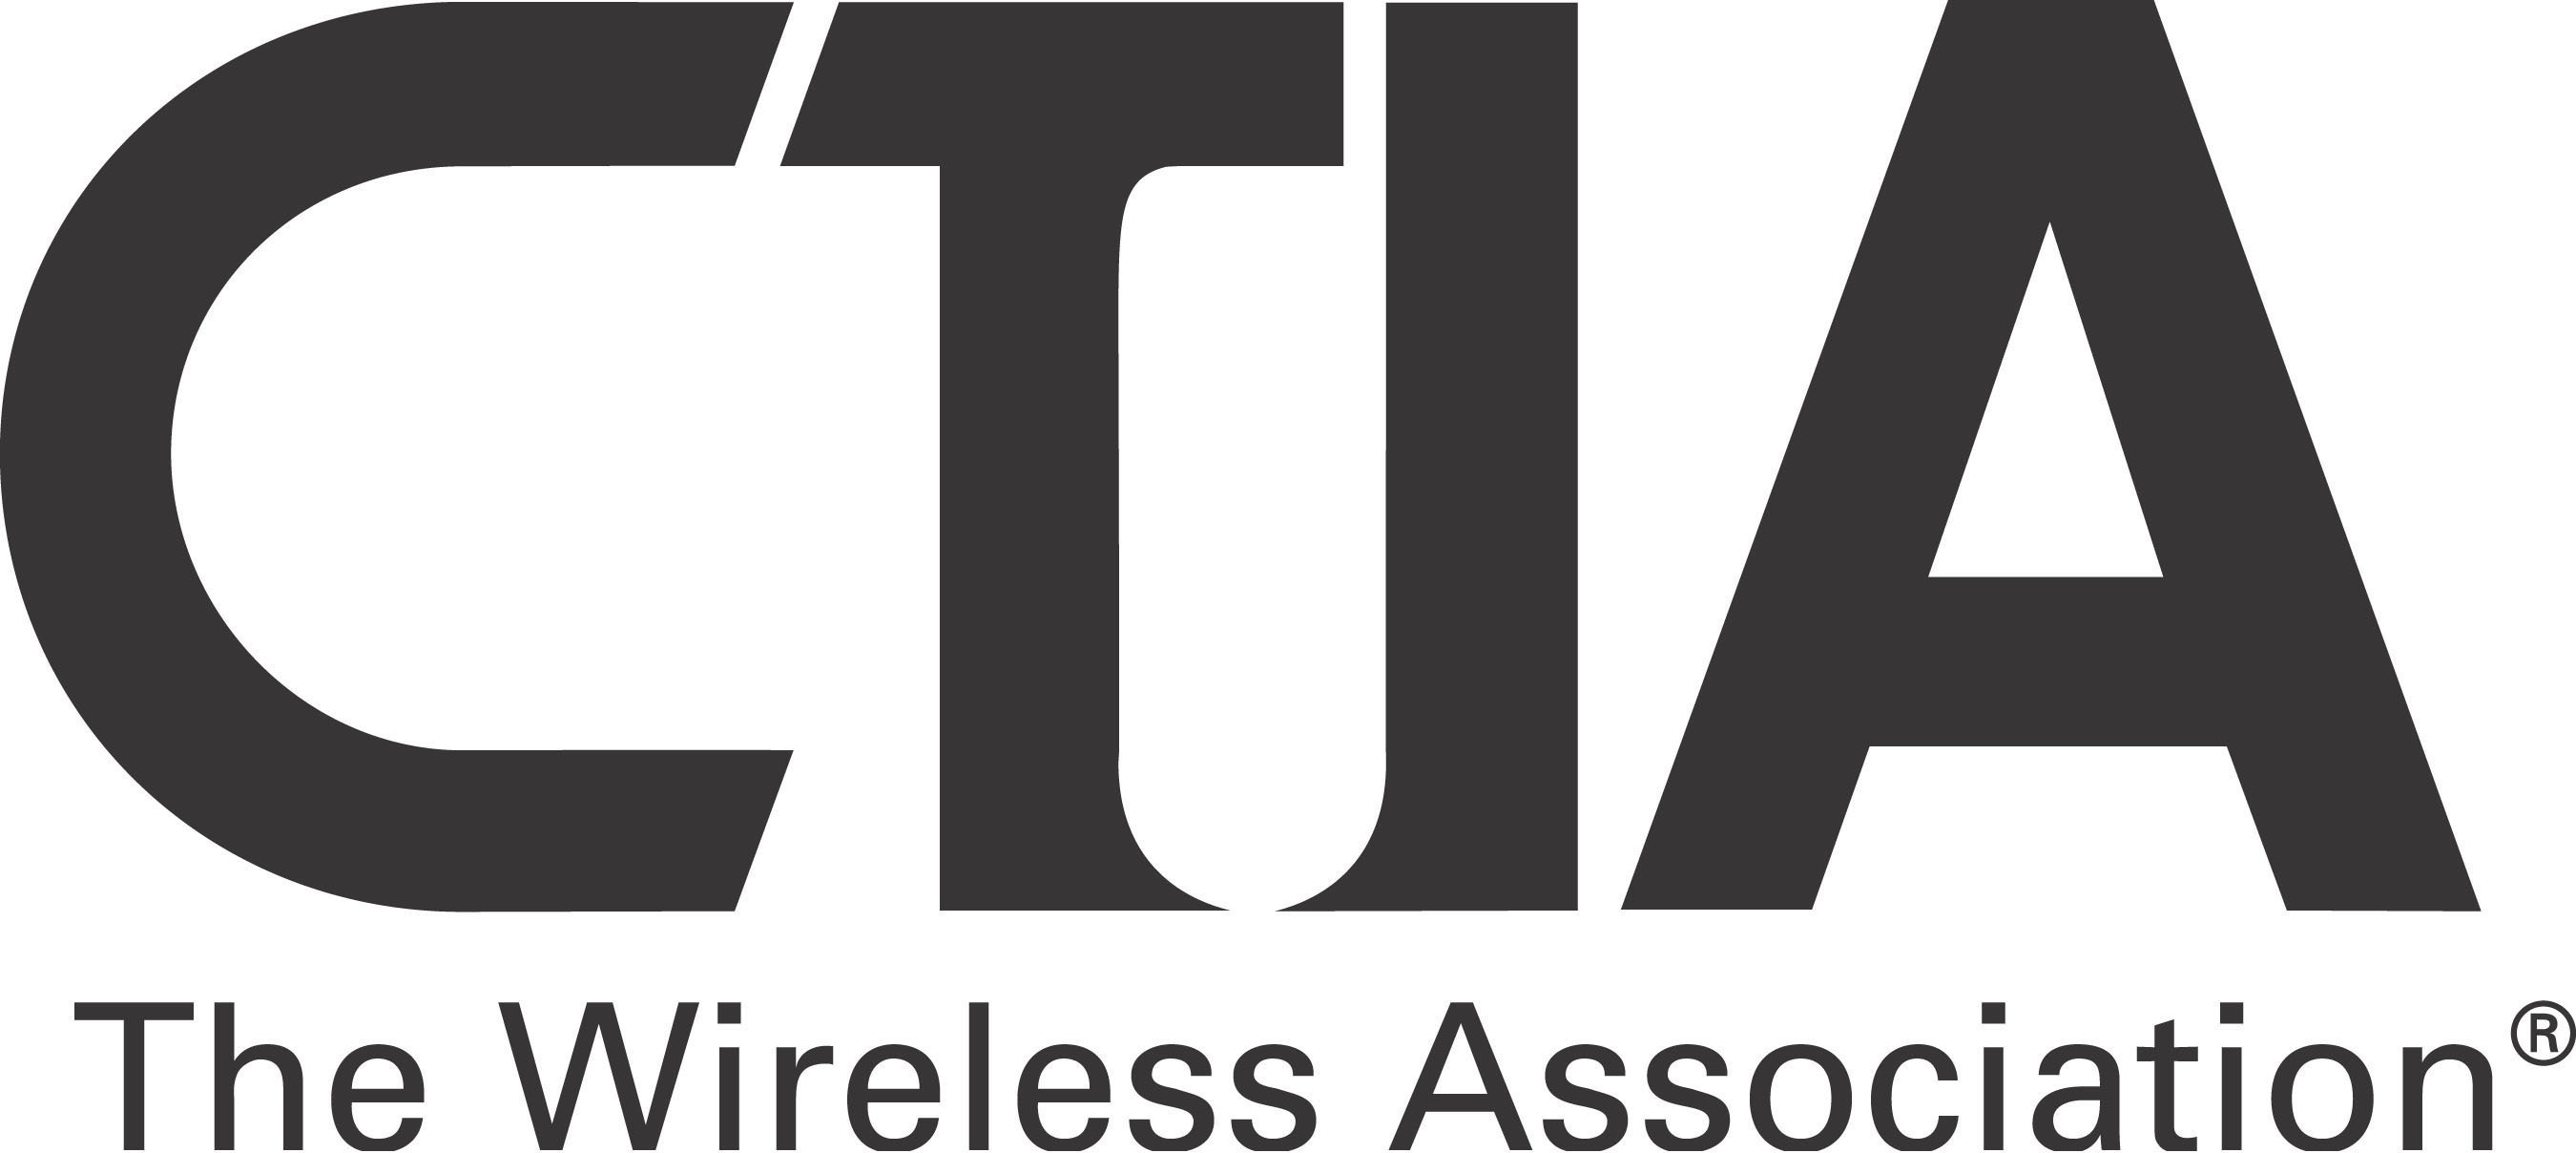 CTIA: The Wireless Association Logo.